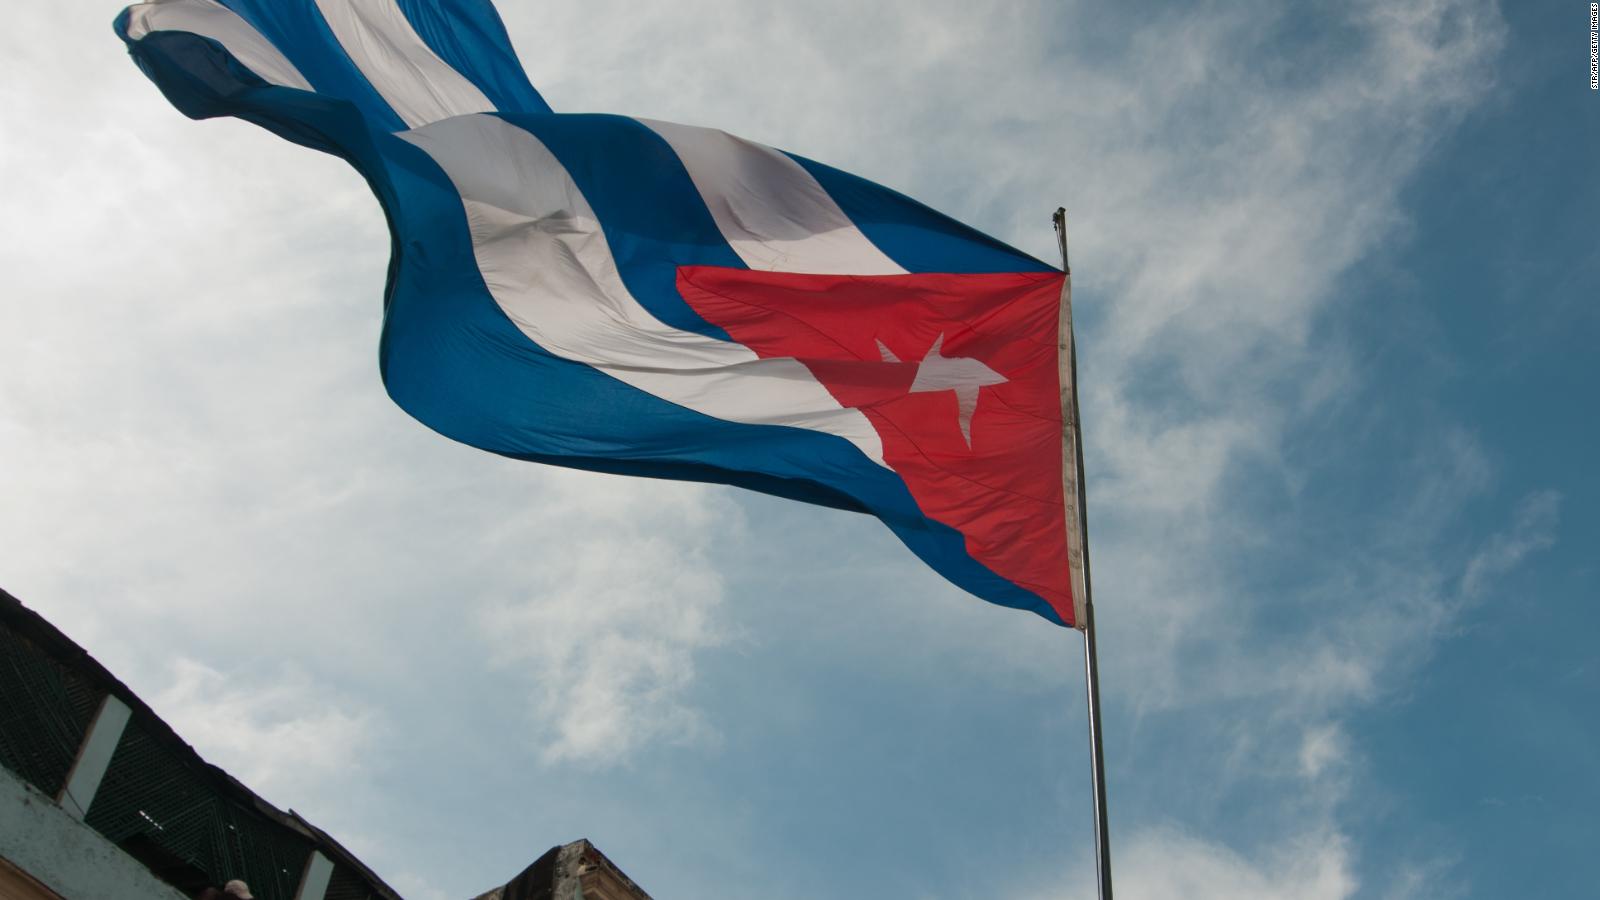 Case for Cuba